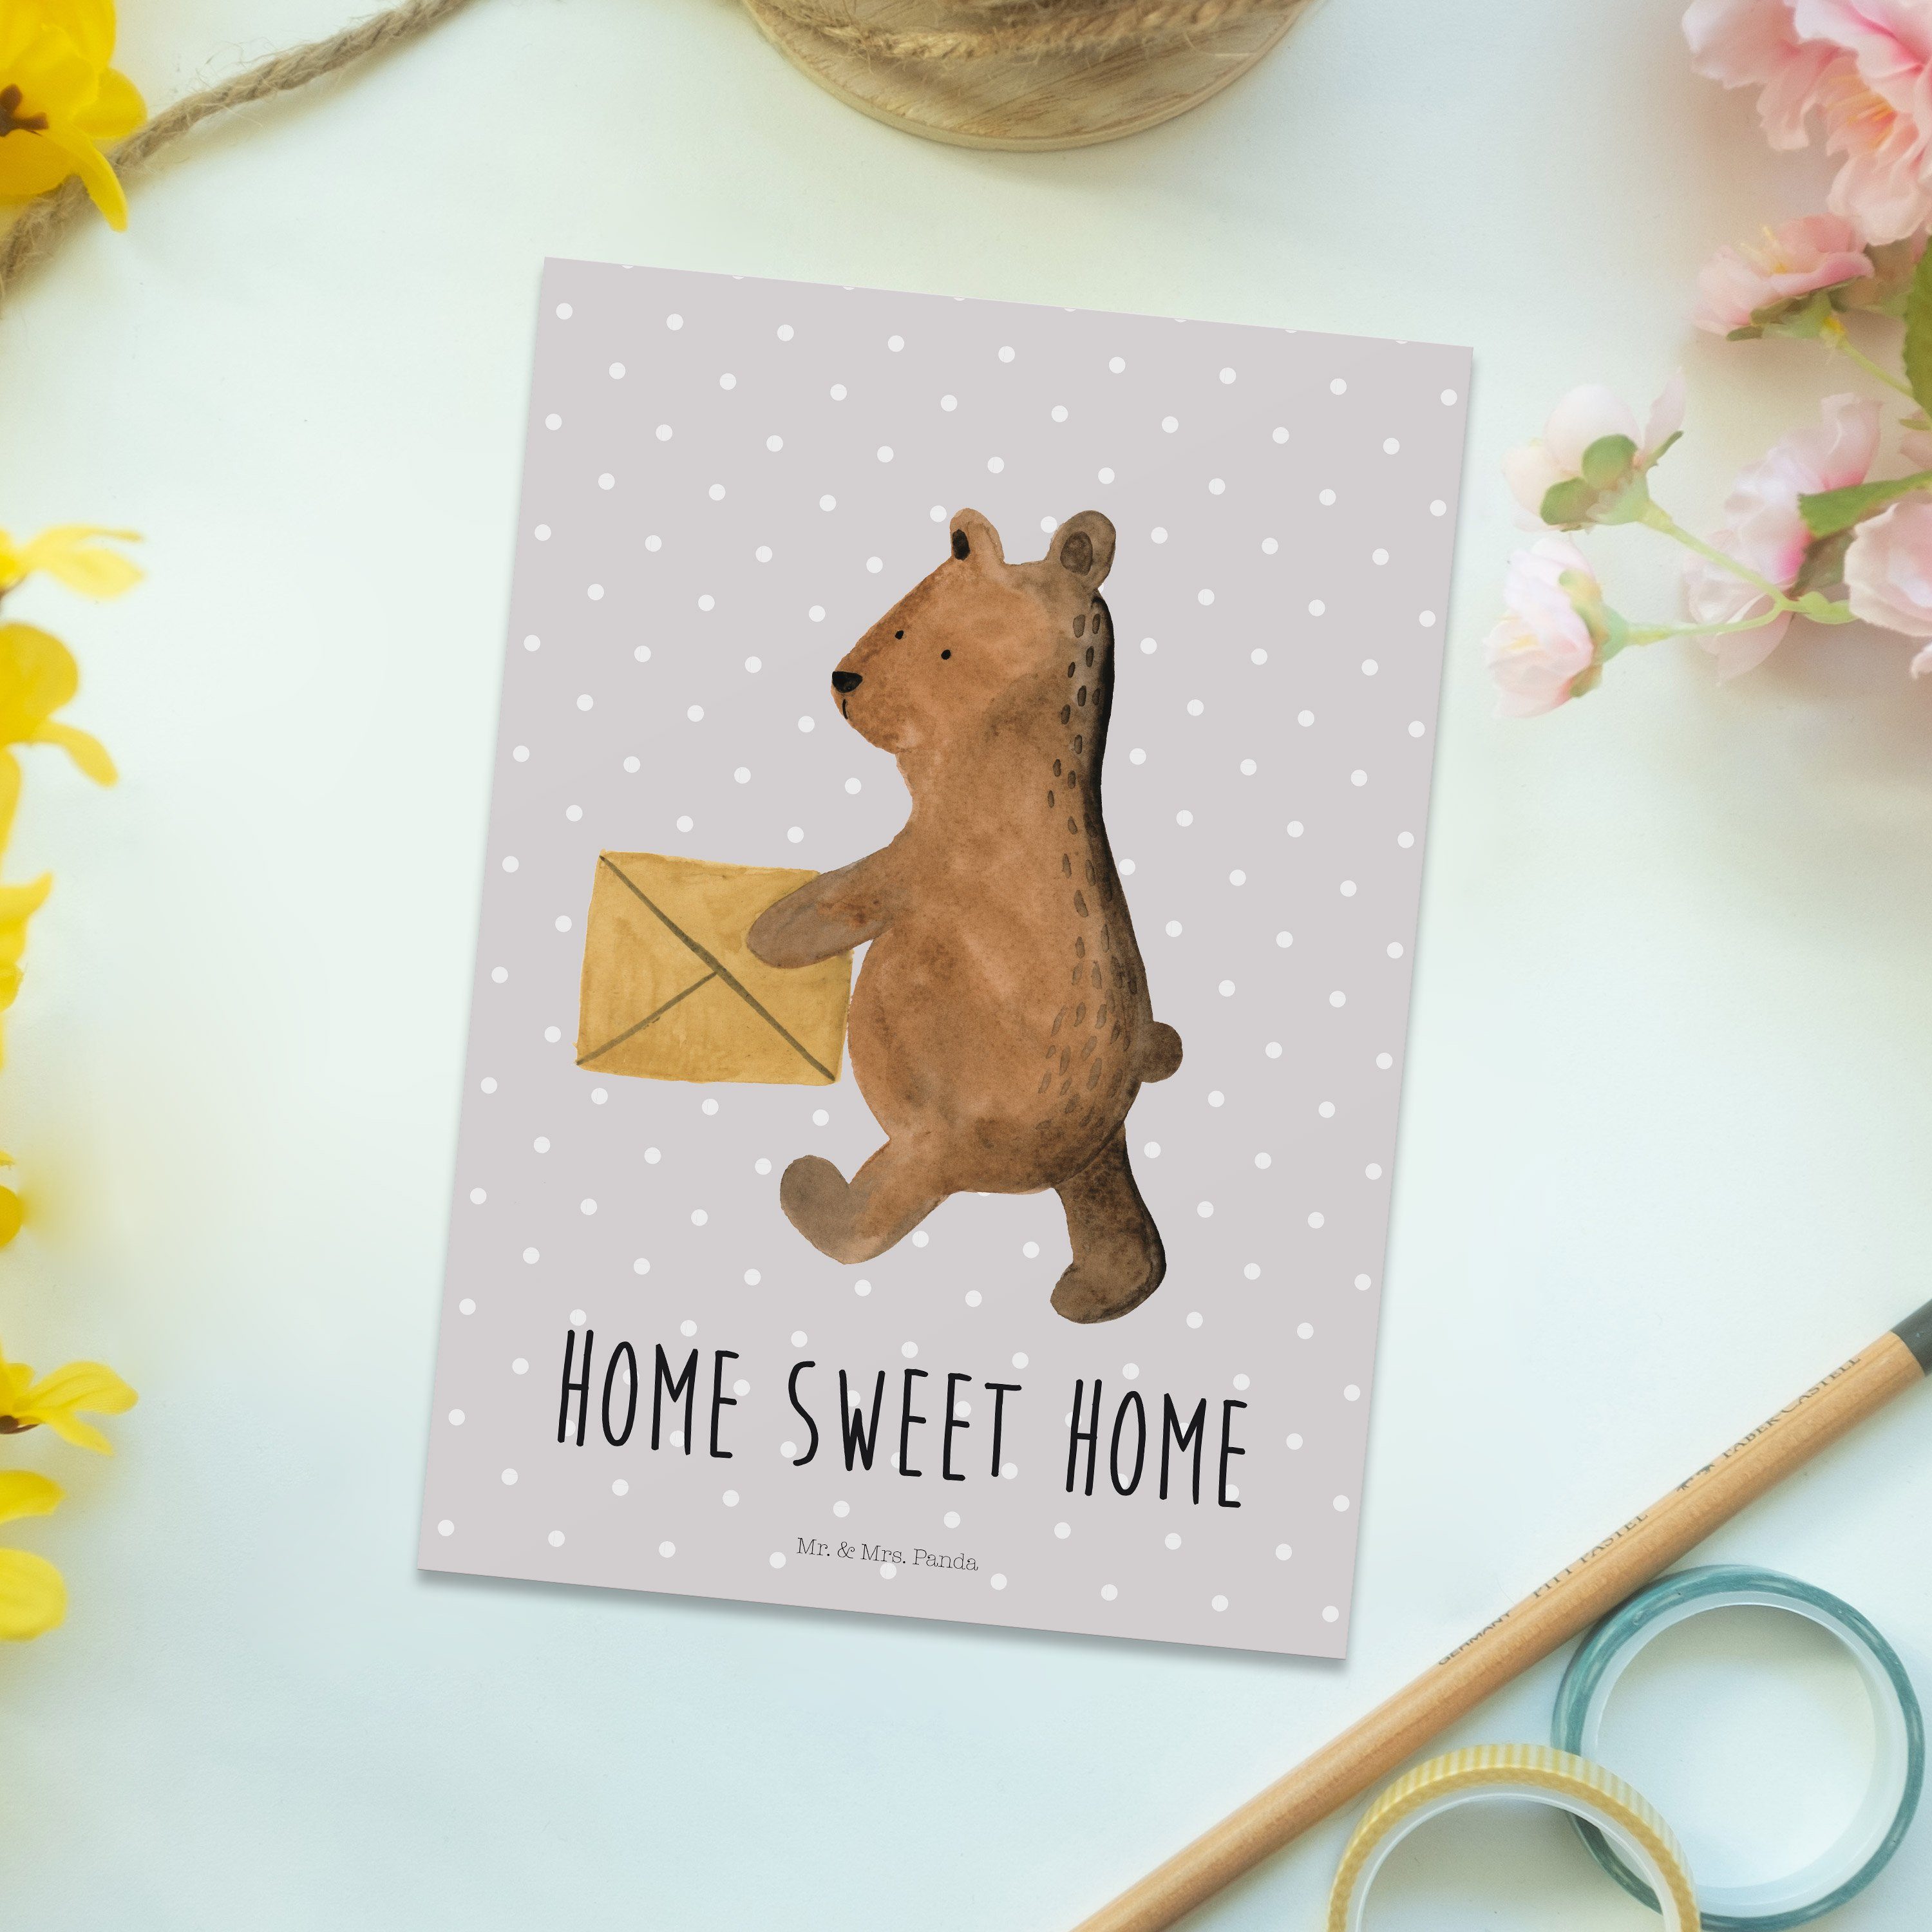 Mr. - Ge Geschenk, Mrs. & Panda Grau - Pastell Postkarte Bär Teddy, Einladung, Zuhause Teddybär,